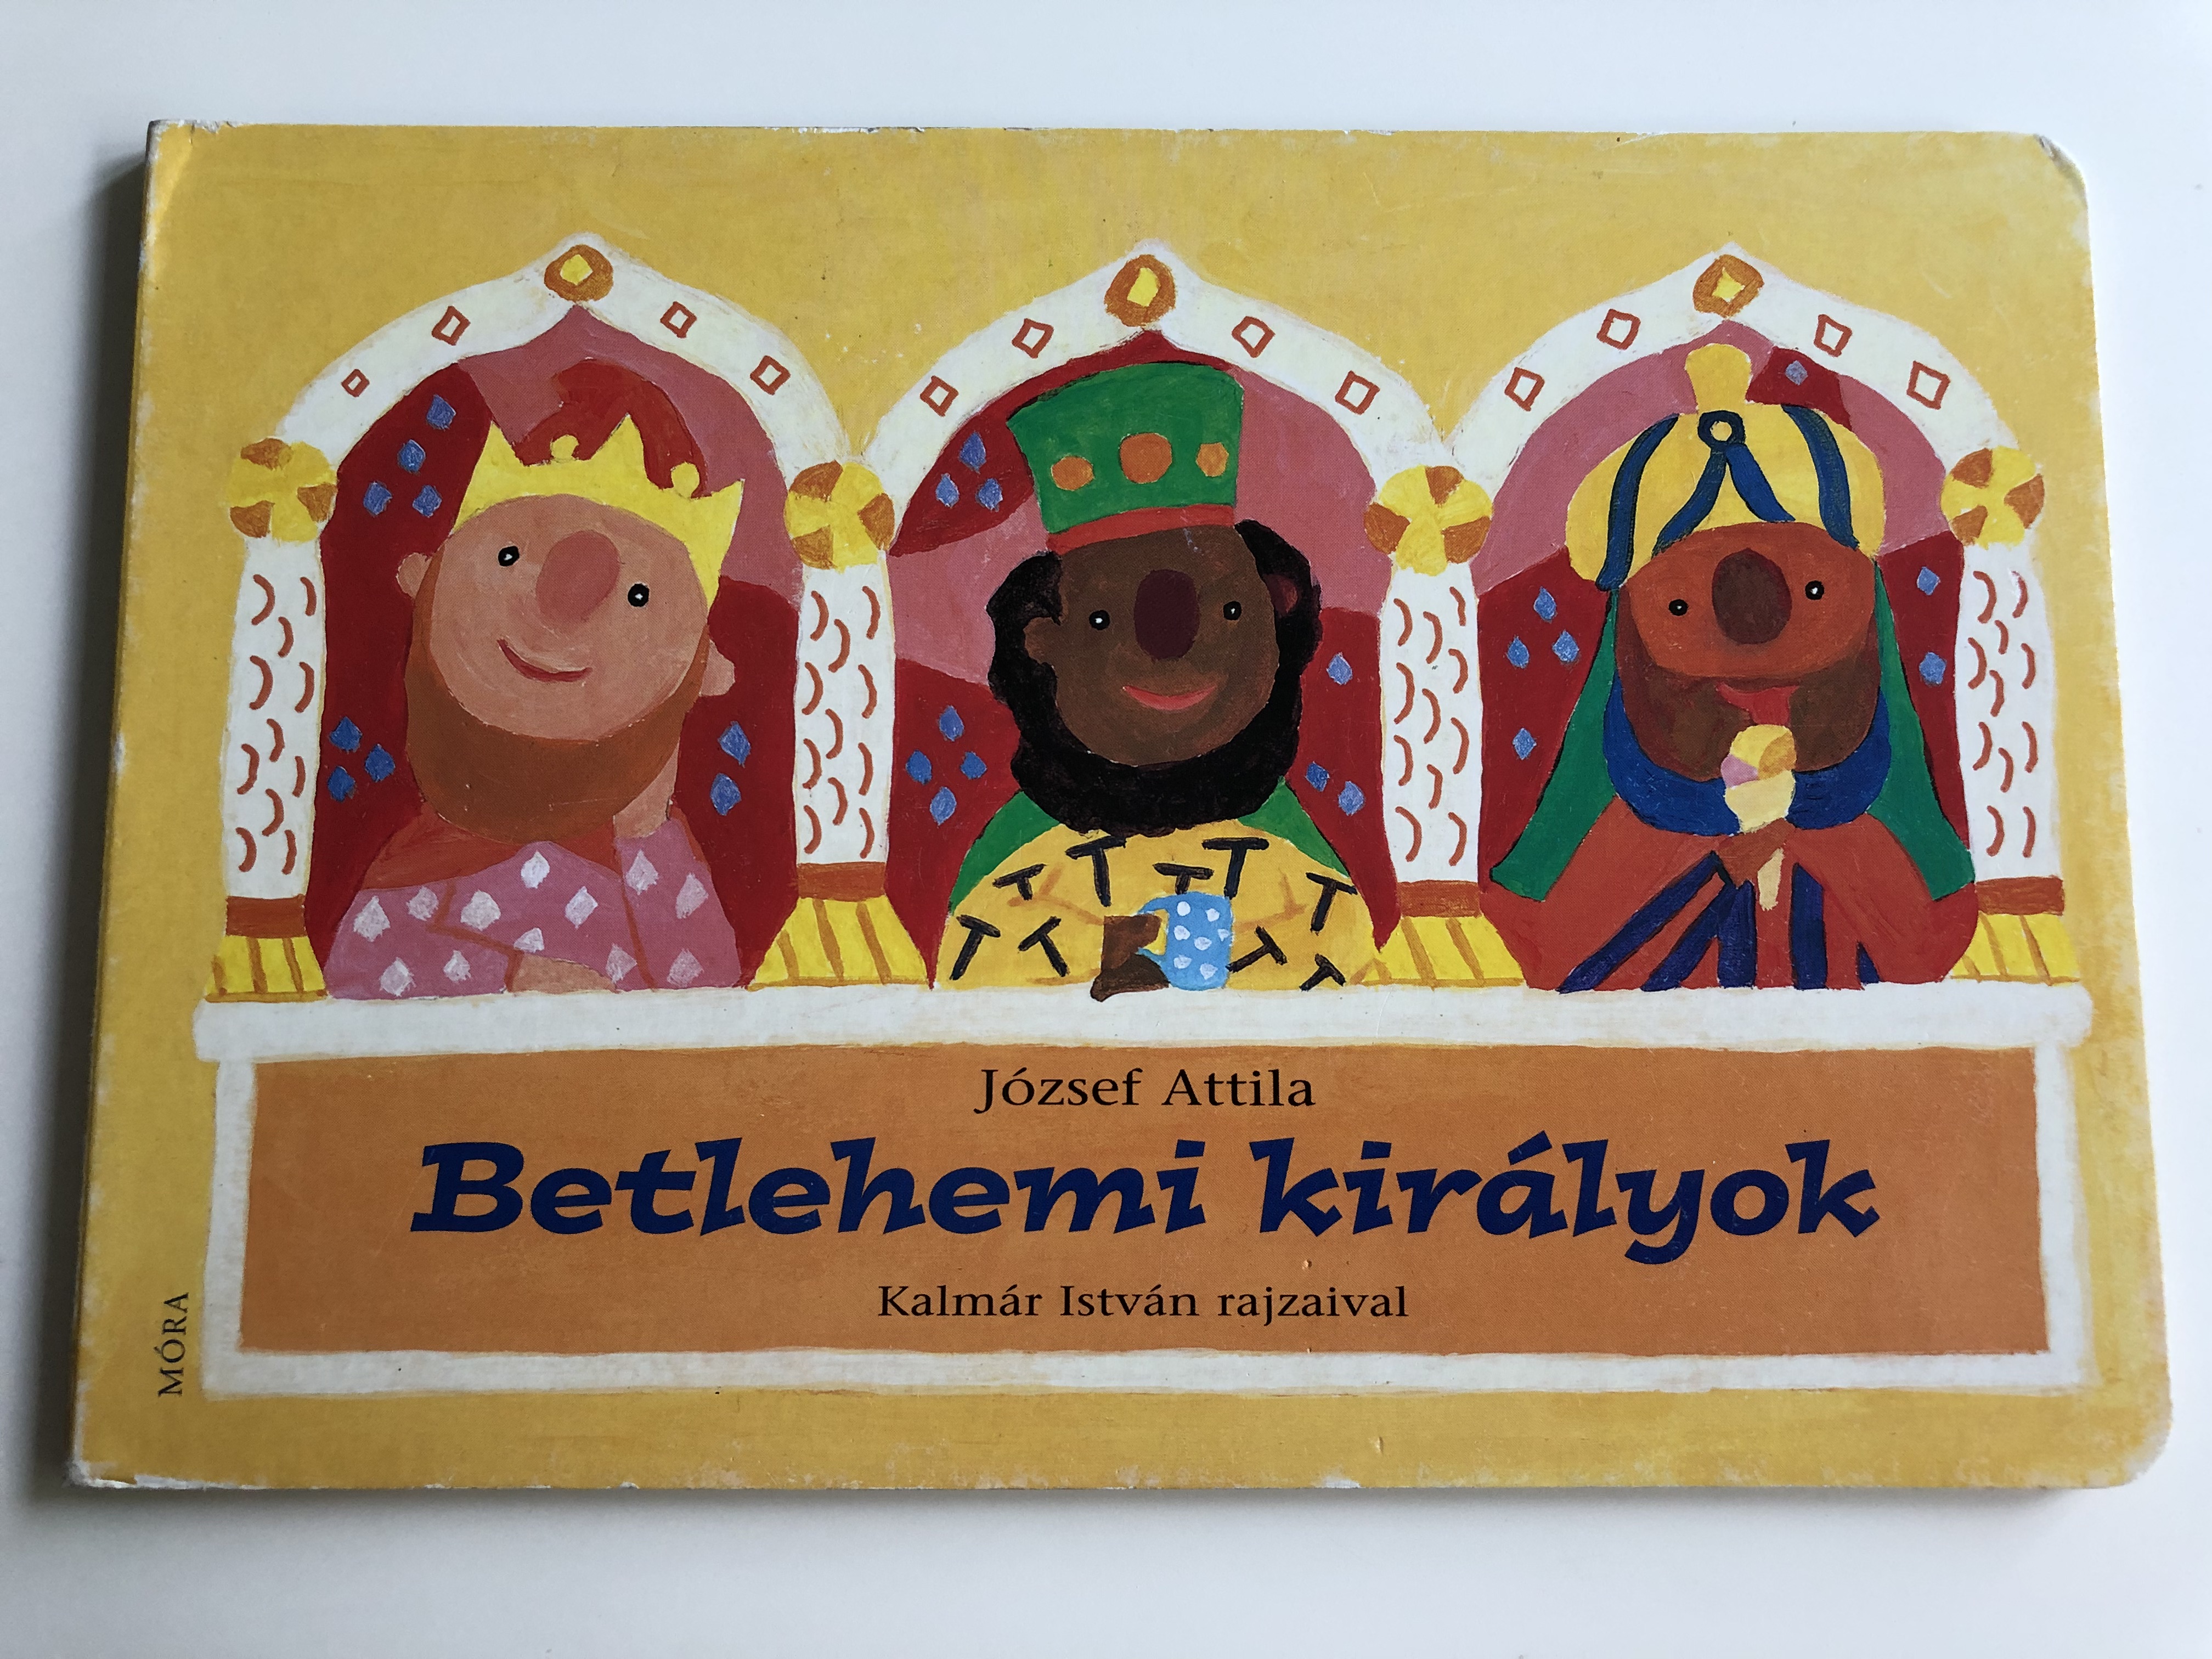 betlehemi-kir-lyok-by-j-zsef-attila-kalm-r-istv-n-the-three-wise-kings-hungarian-board-book-for-children-m-ra-k-nyvkiad-2010-1-.jpg